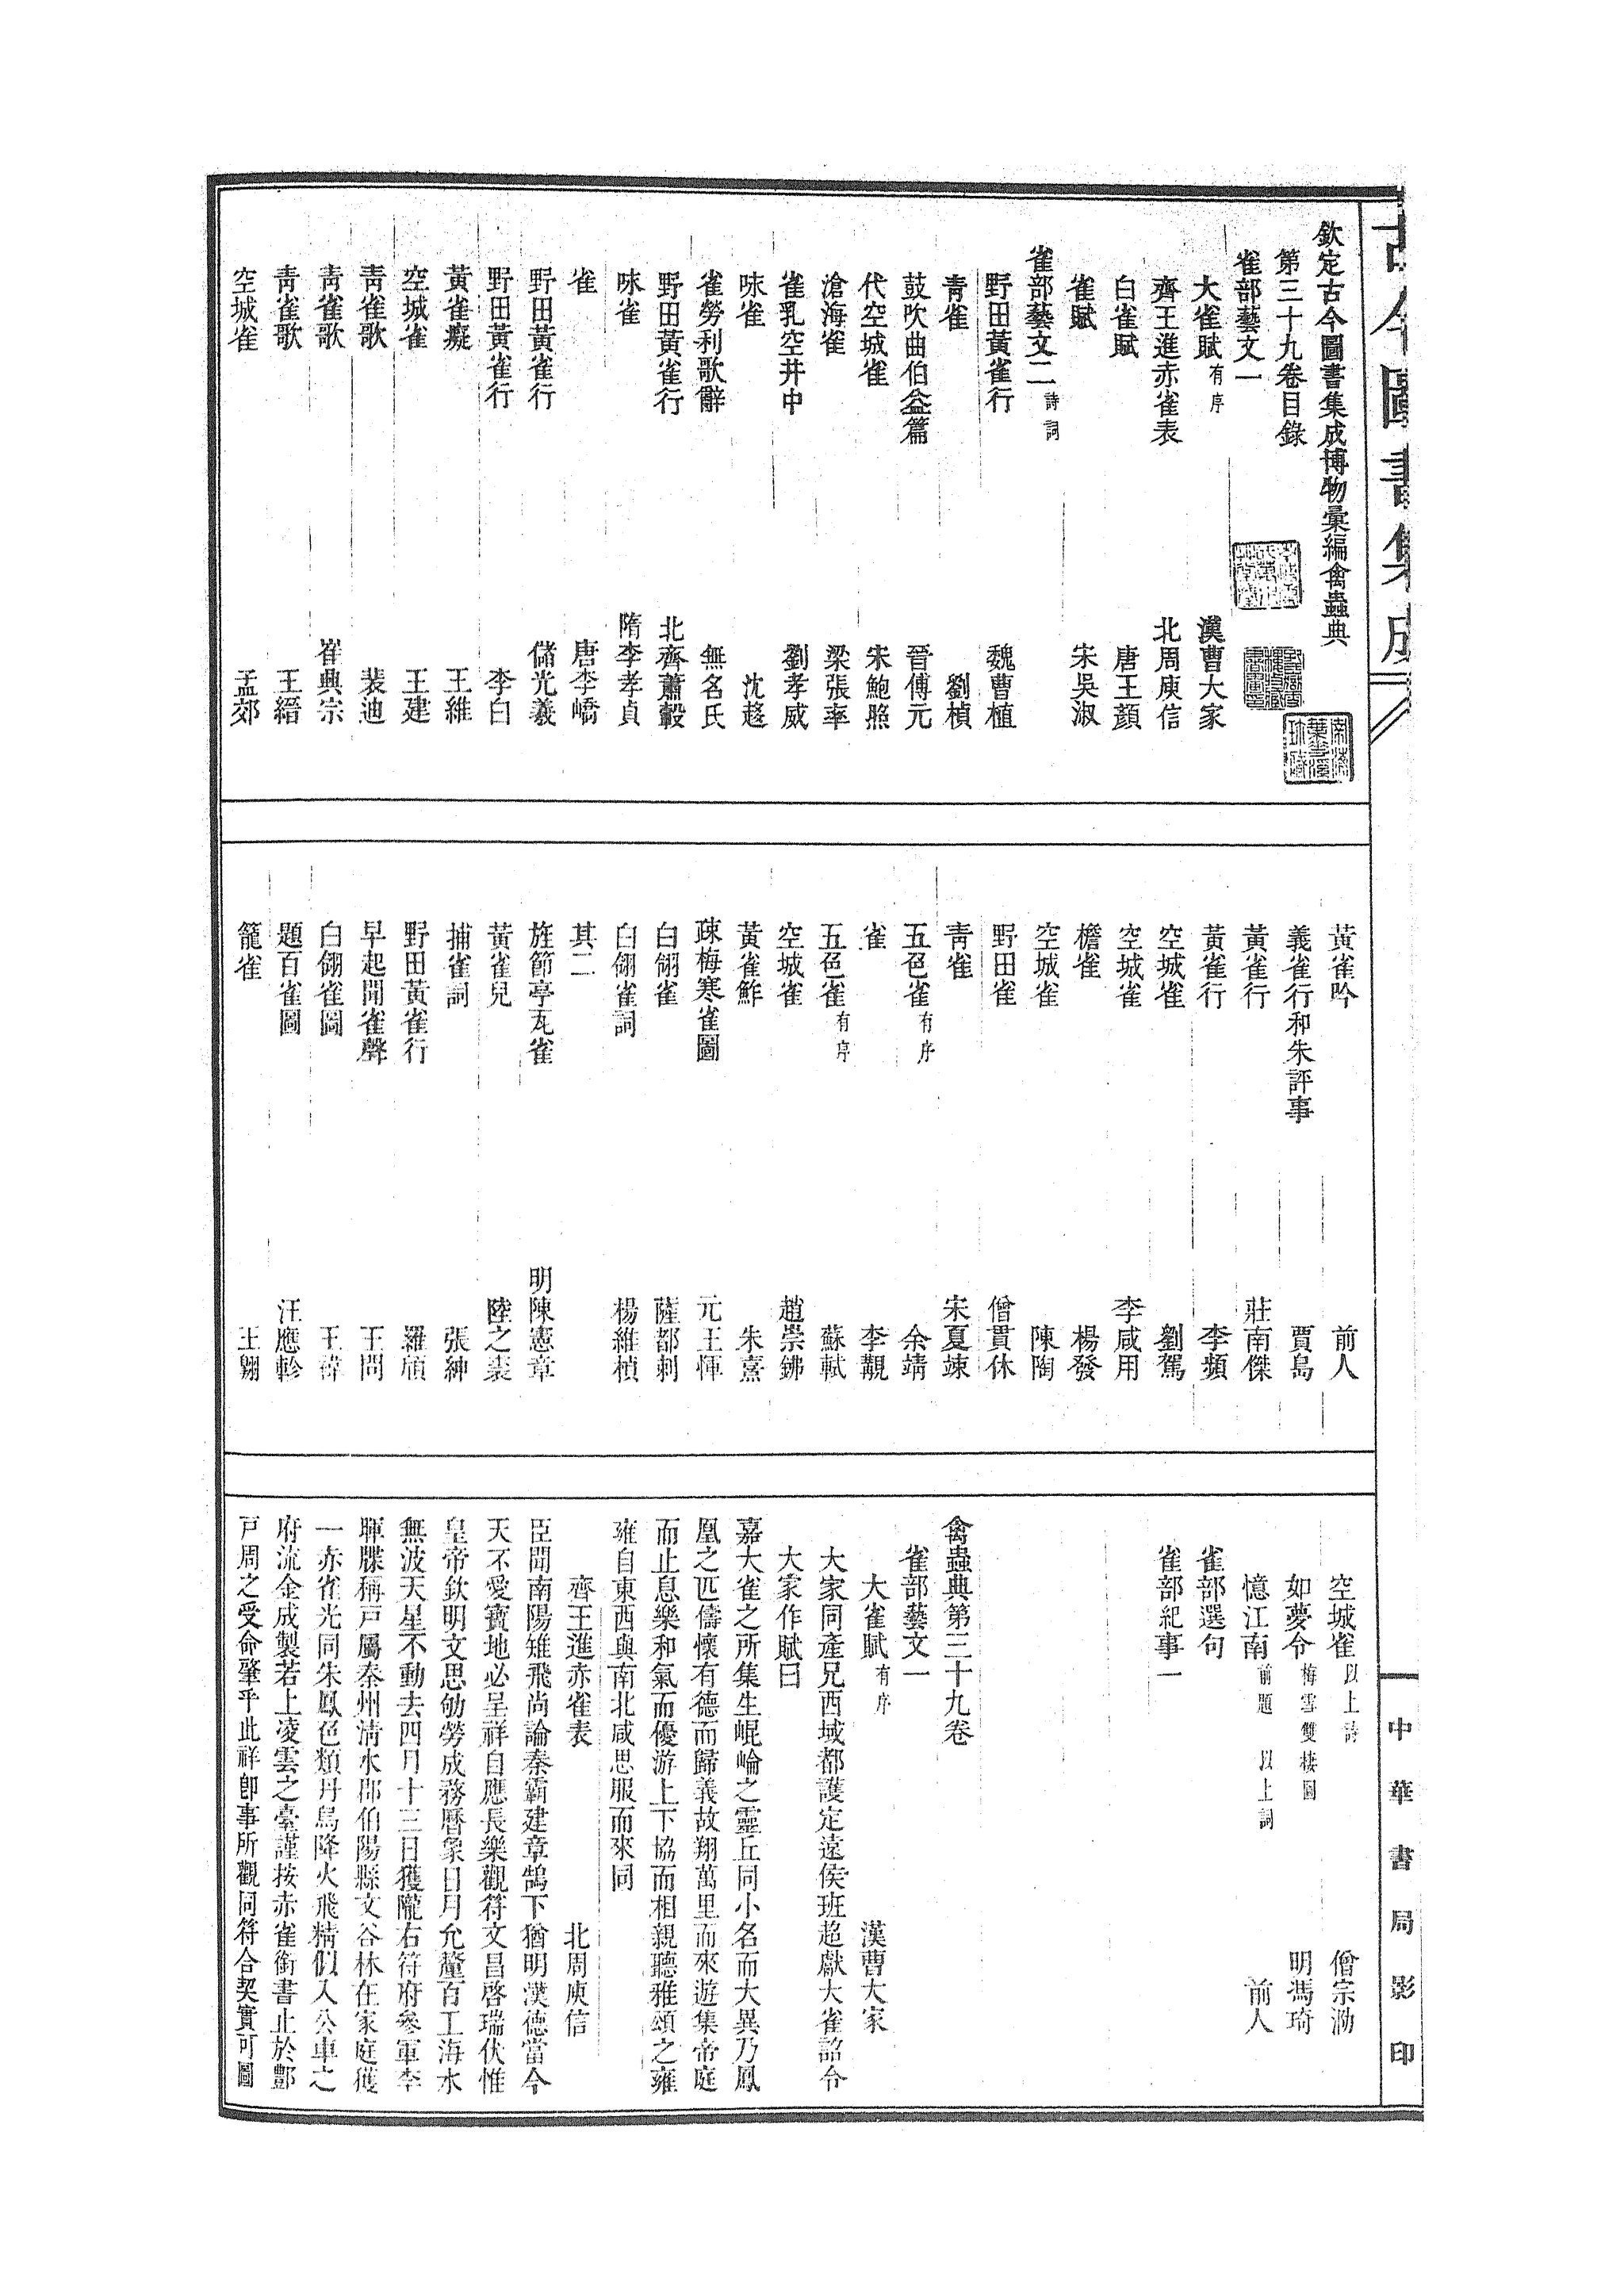 Page Gujin Tushu Jicheng Volume 518 1700 1725 Djvu 35 维基文库 自由的图书馆